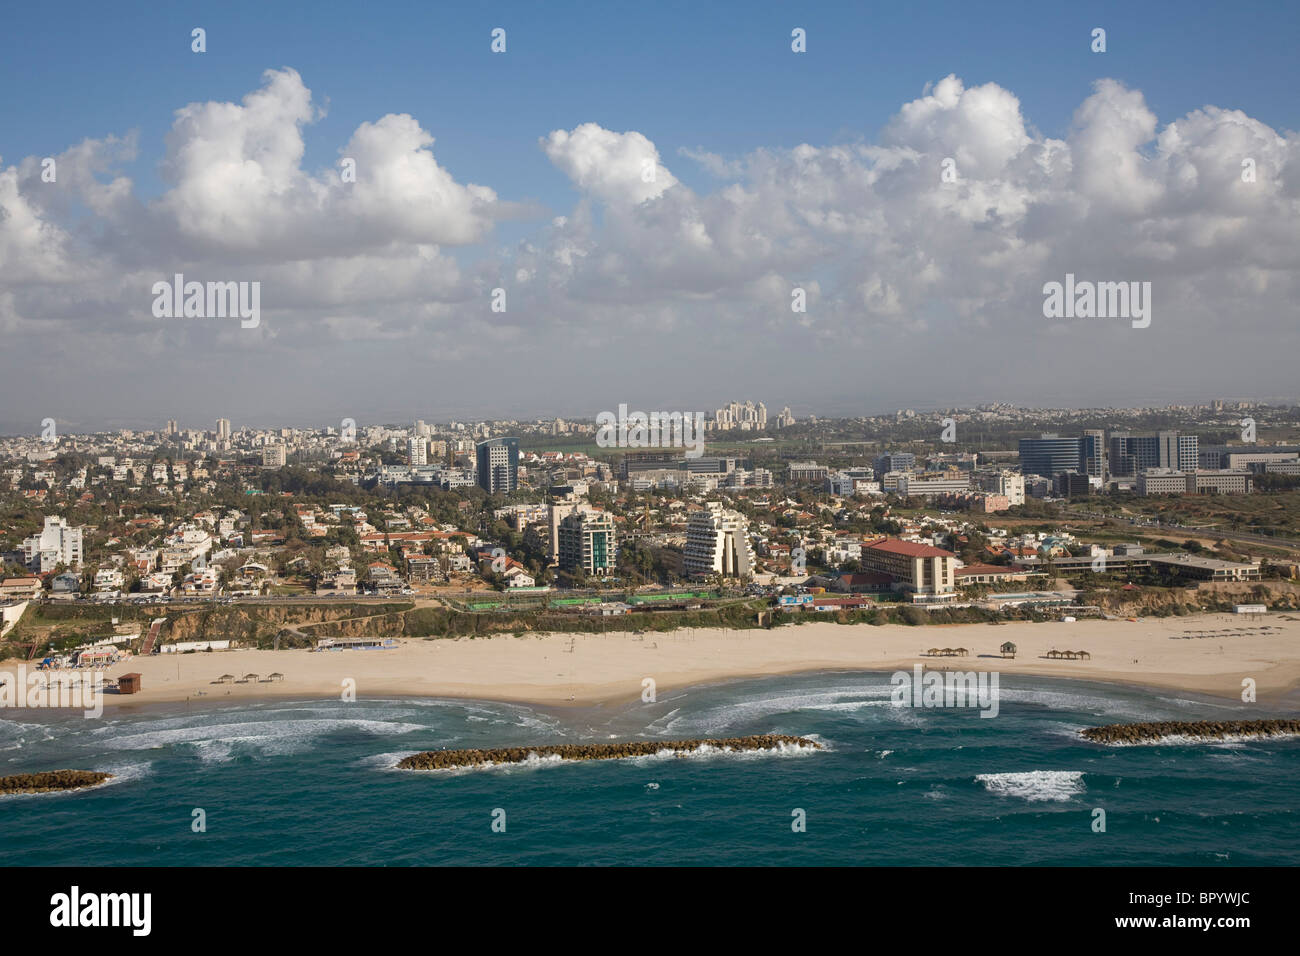 Aerial photograph of Herzliyah's coastline Stock Photo